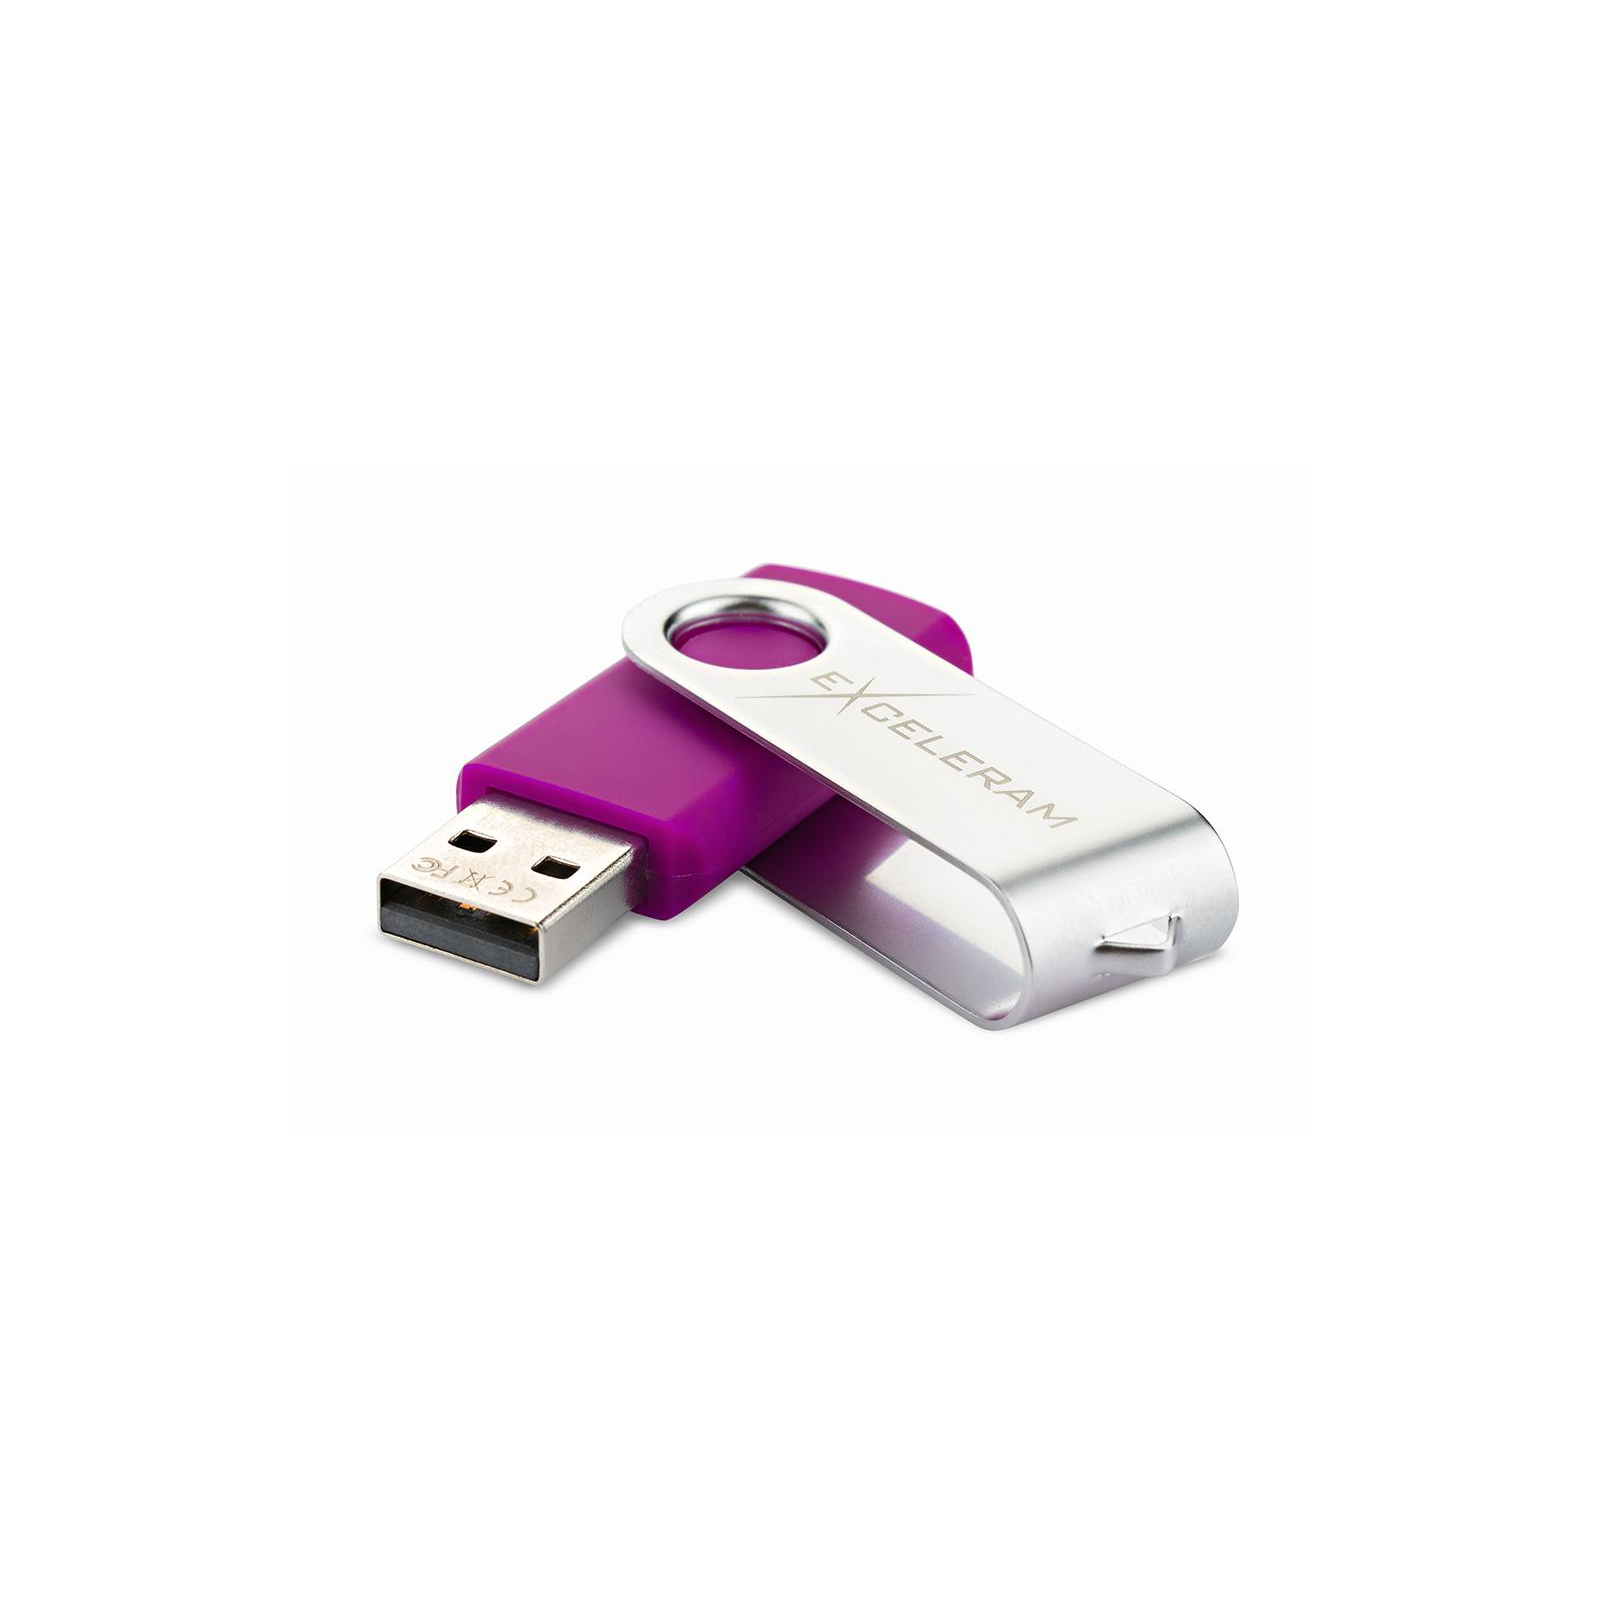 USB флеш накопитель eXceleram 8GB P1 Series Silver/Red USB 2.0 (EXP1U2SIRE08) изображение 2